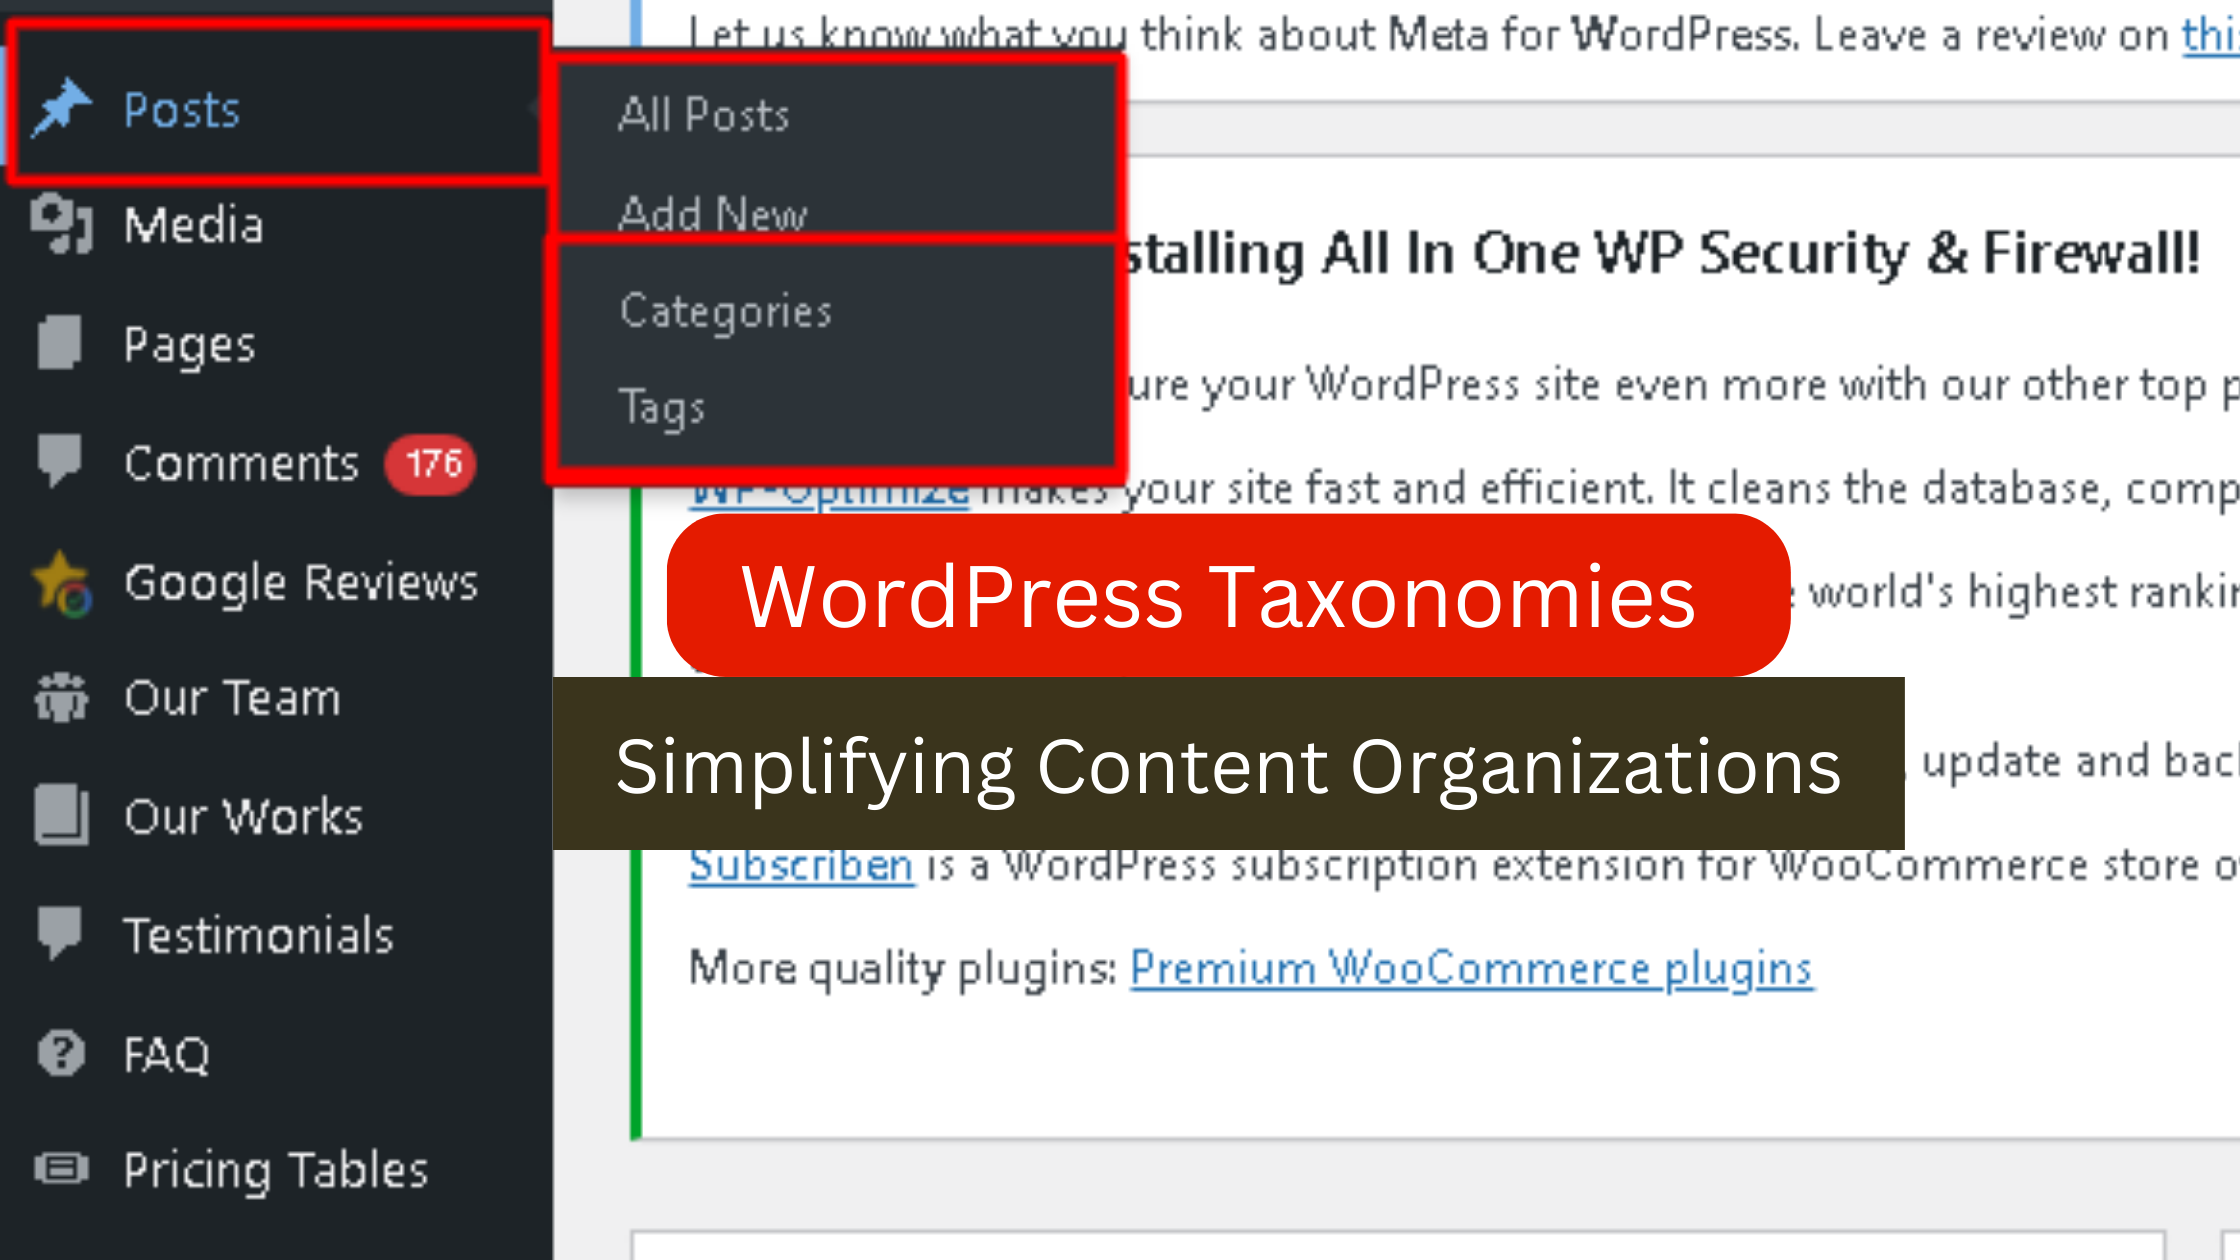 WordPress-Taxonomies-simplifying-content-organization